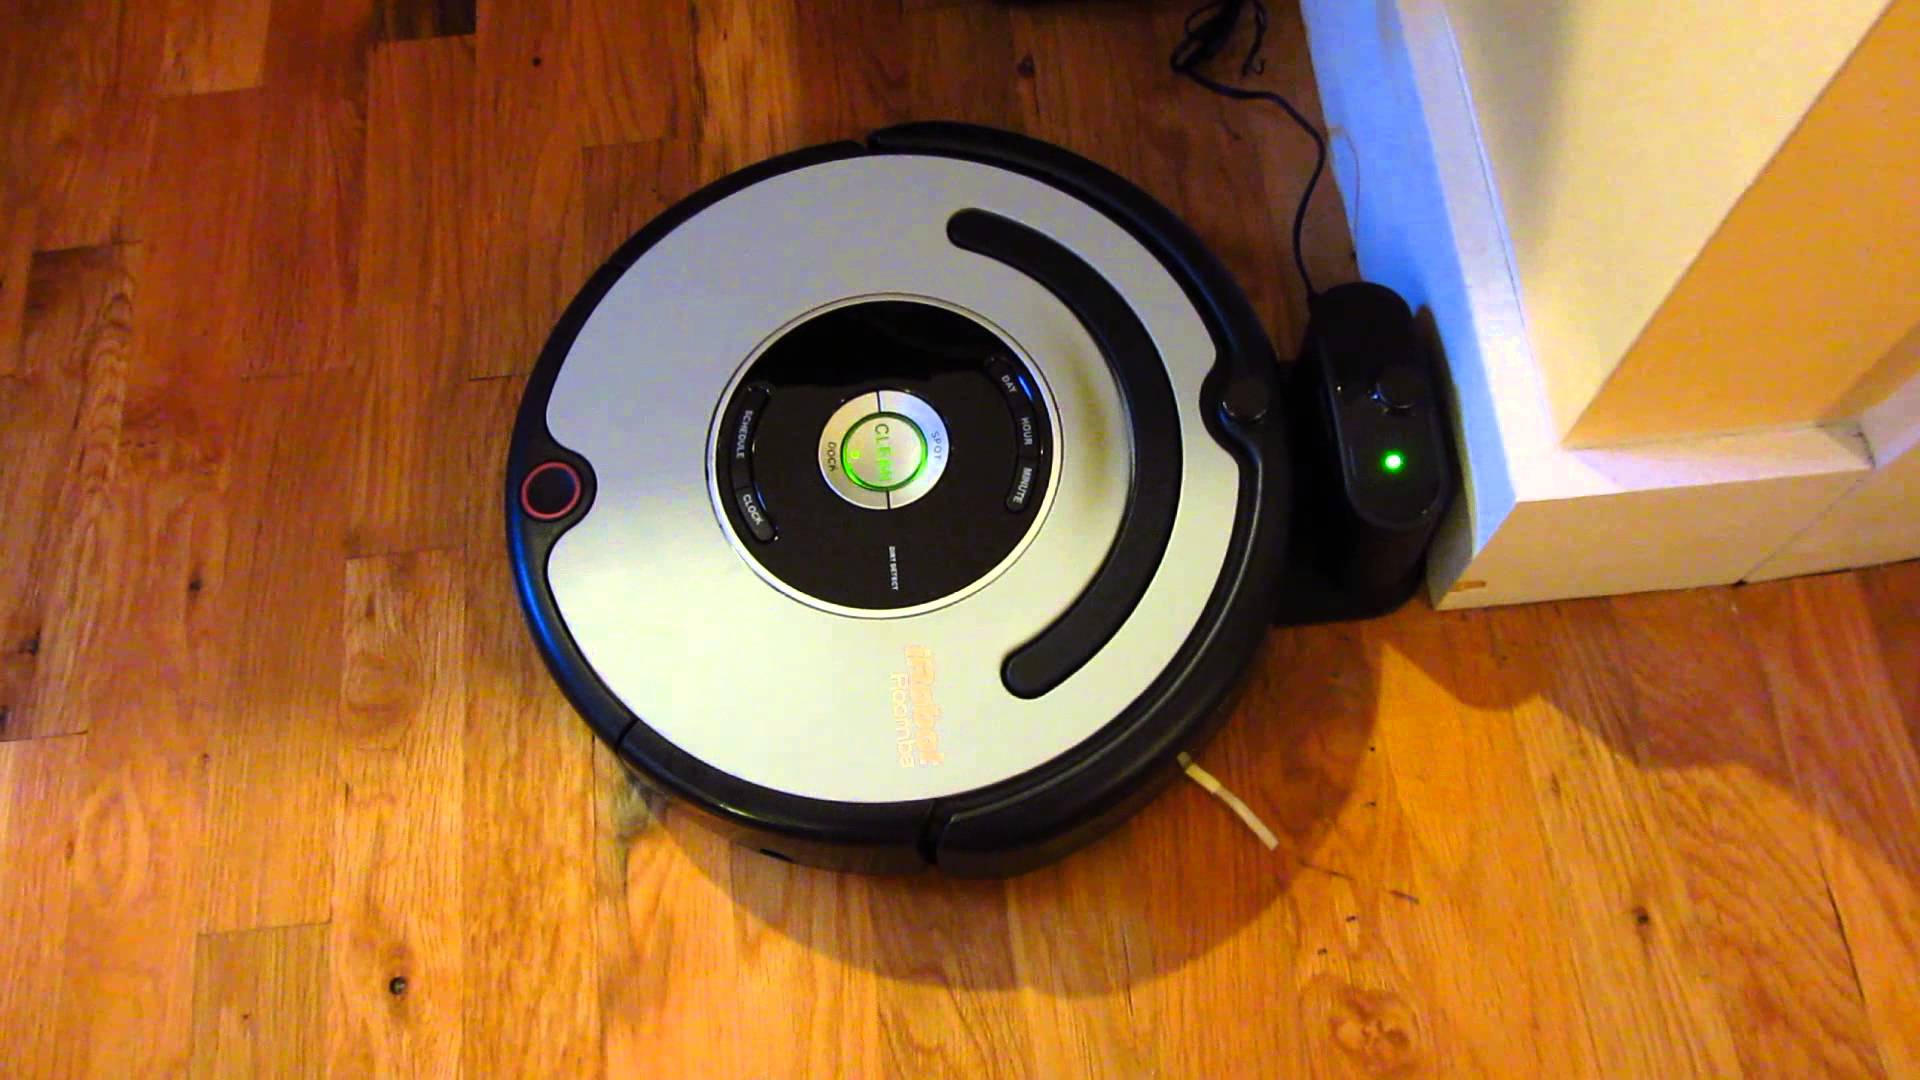 station recharge du Roomba d'iRobot